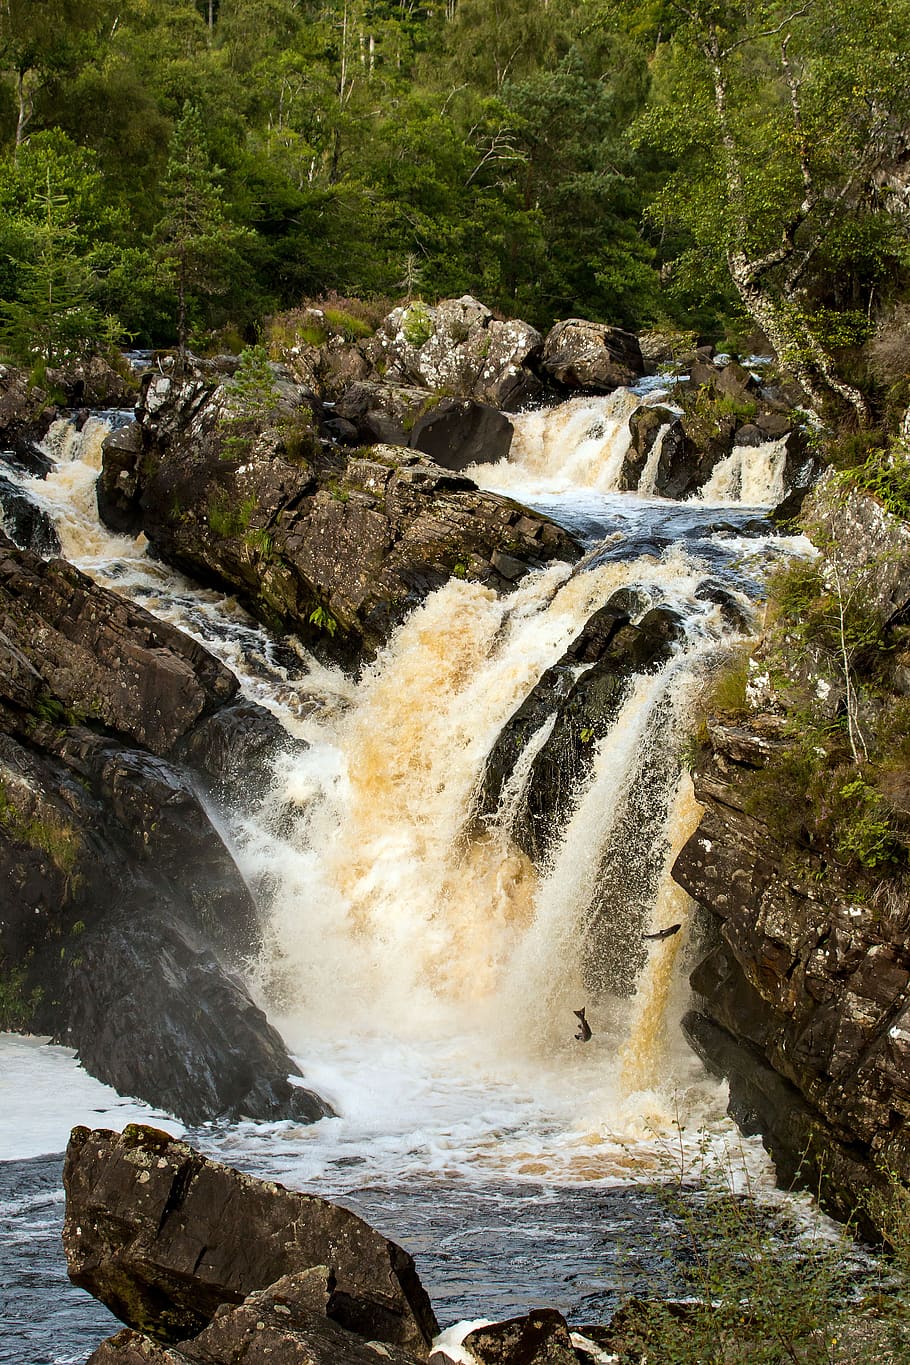 scotland, salmon, rogie falls, waterfall, salmon migration, water, tree, flowing water, beauty in nature, rock